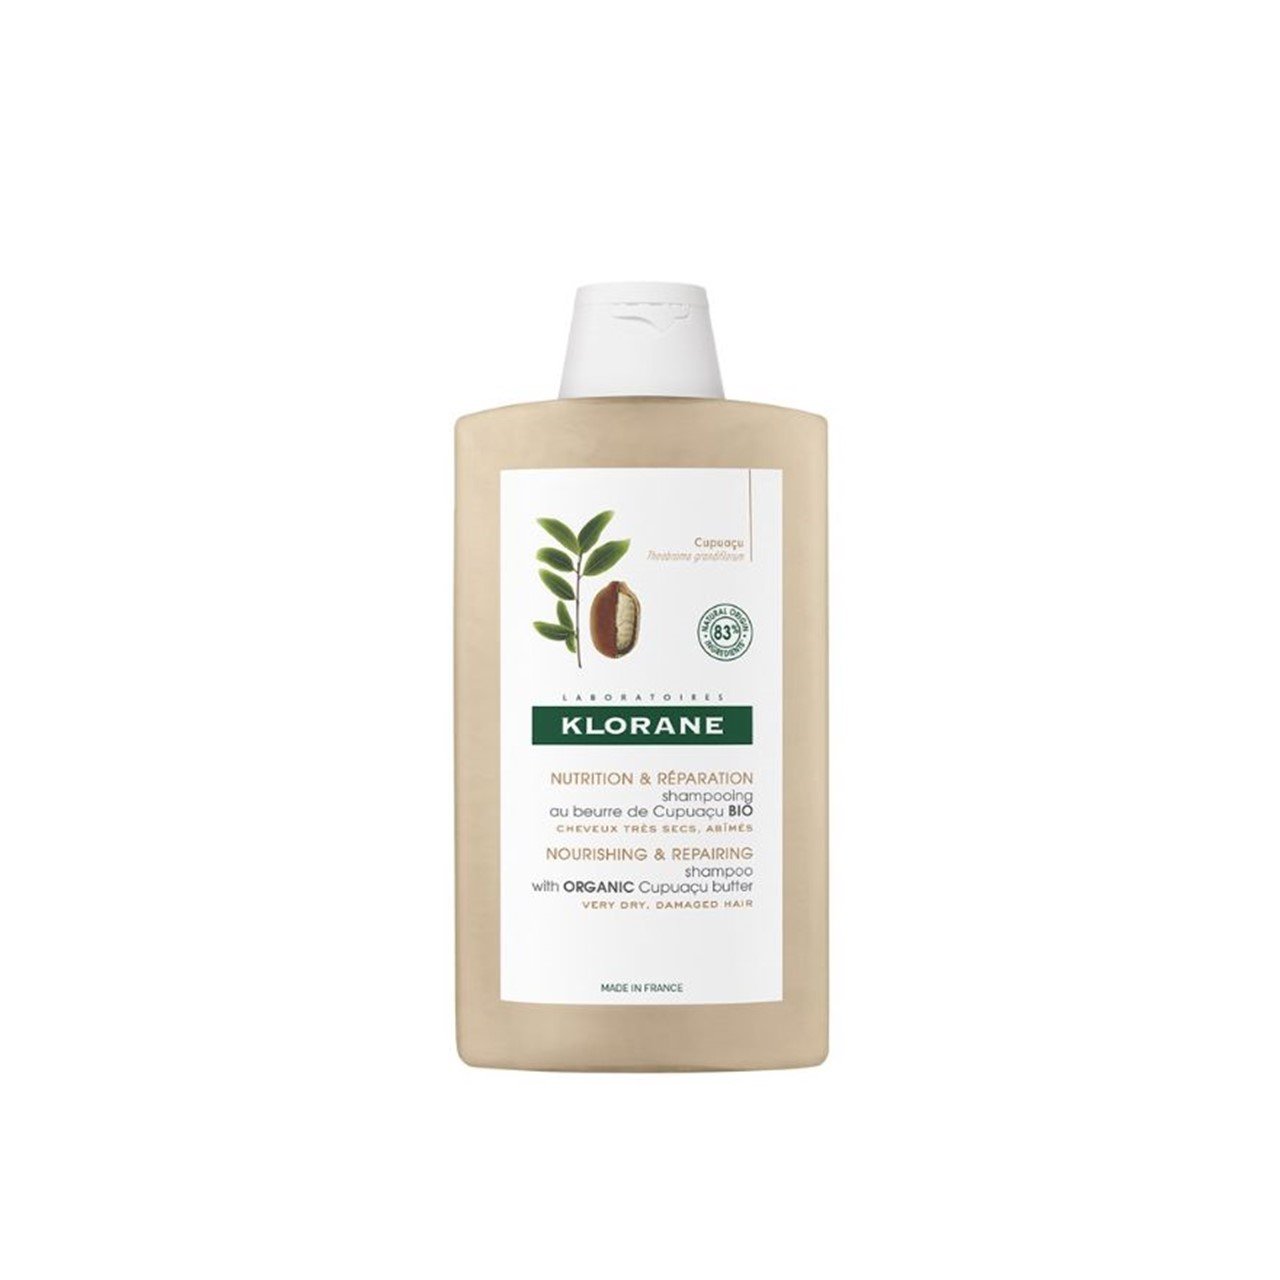 Klorane Nourishing & Repairing Organic Cupuaçu Butter Shampoo 200ml (6.76fl oz)